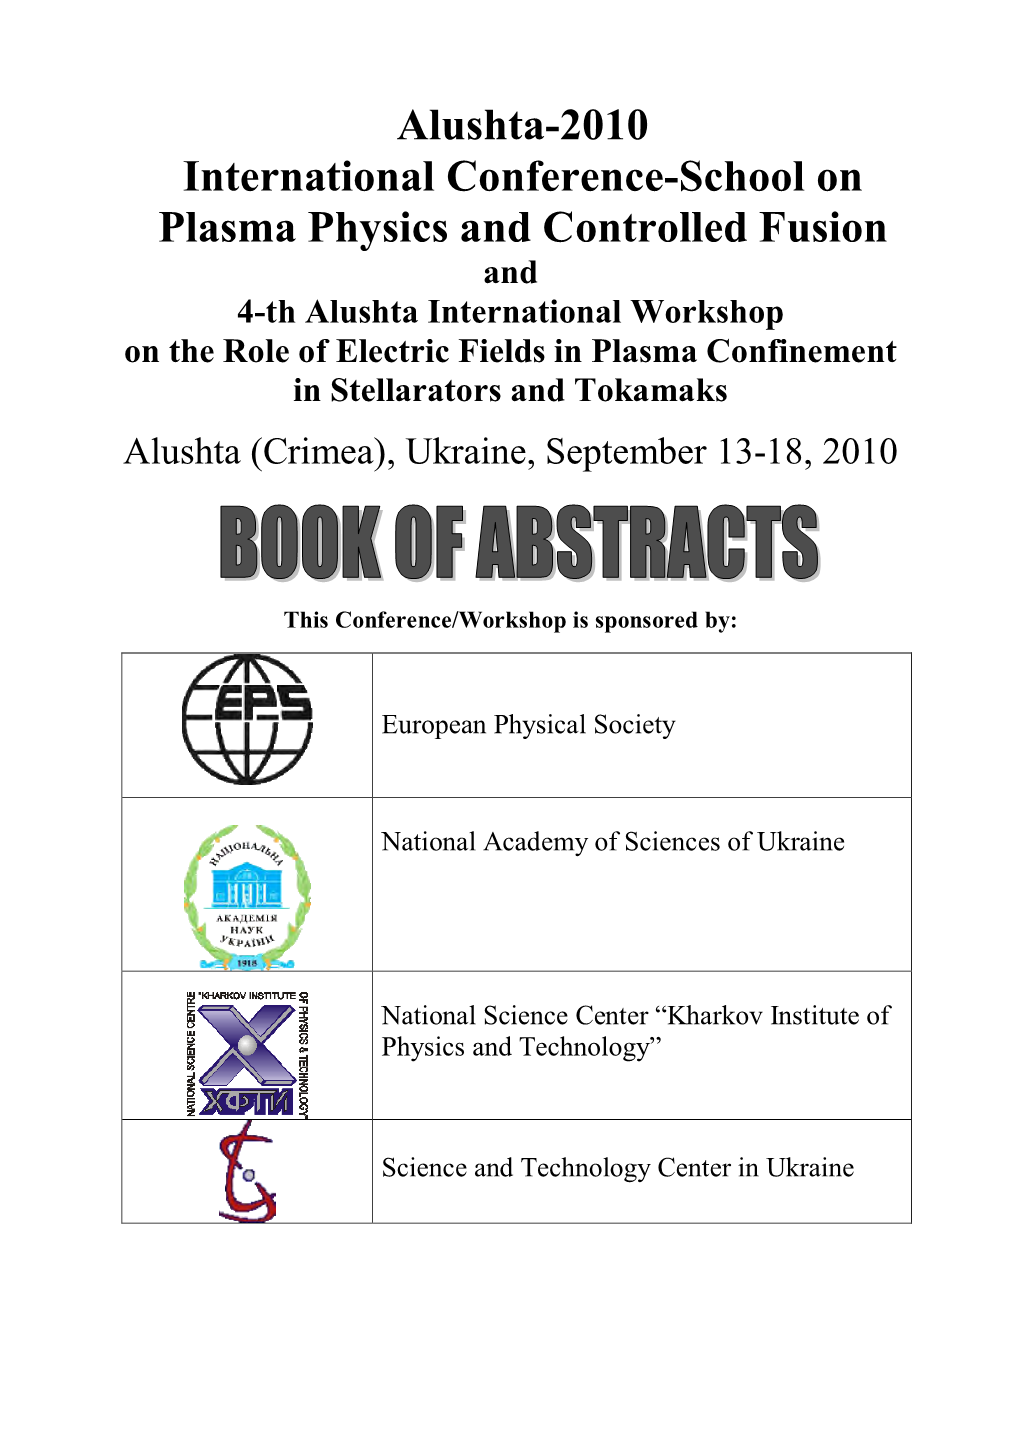 Alushta-2010 International Conference-School on Plasma Physics and Controlled Fusion